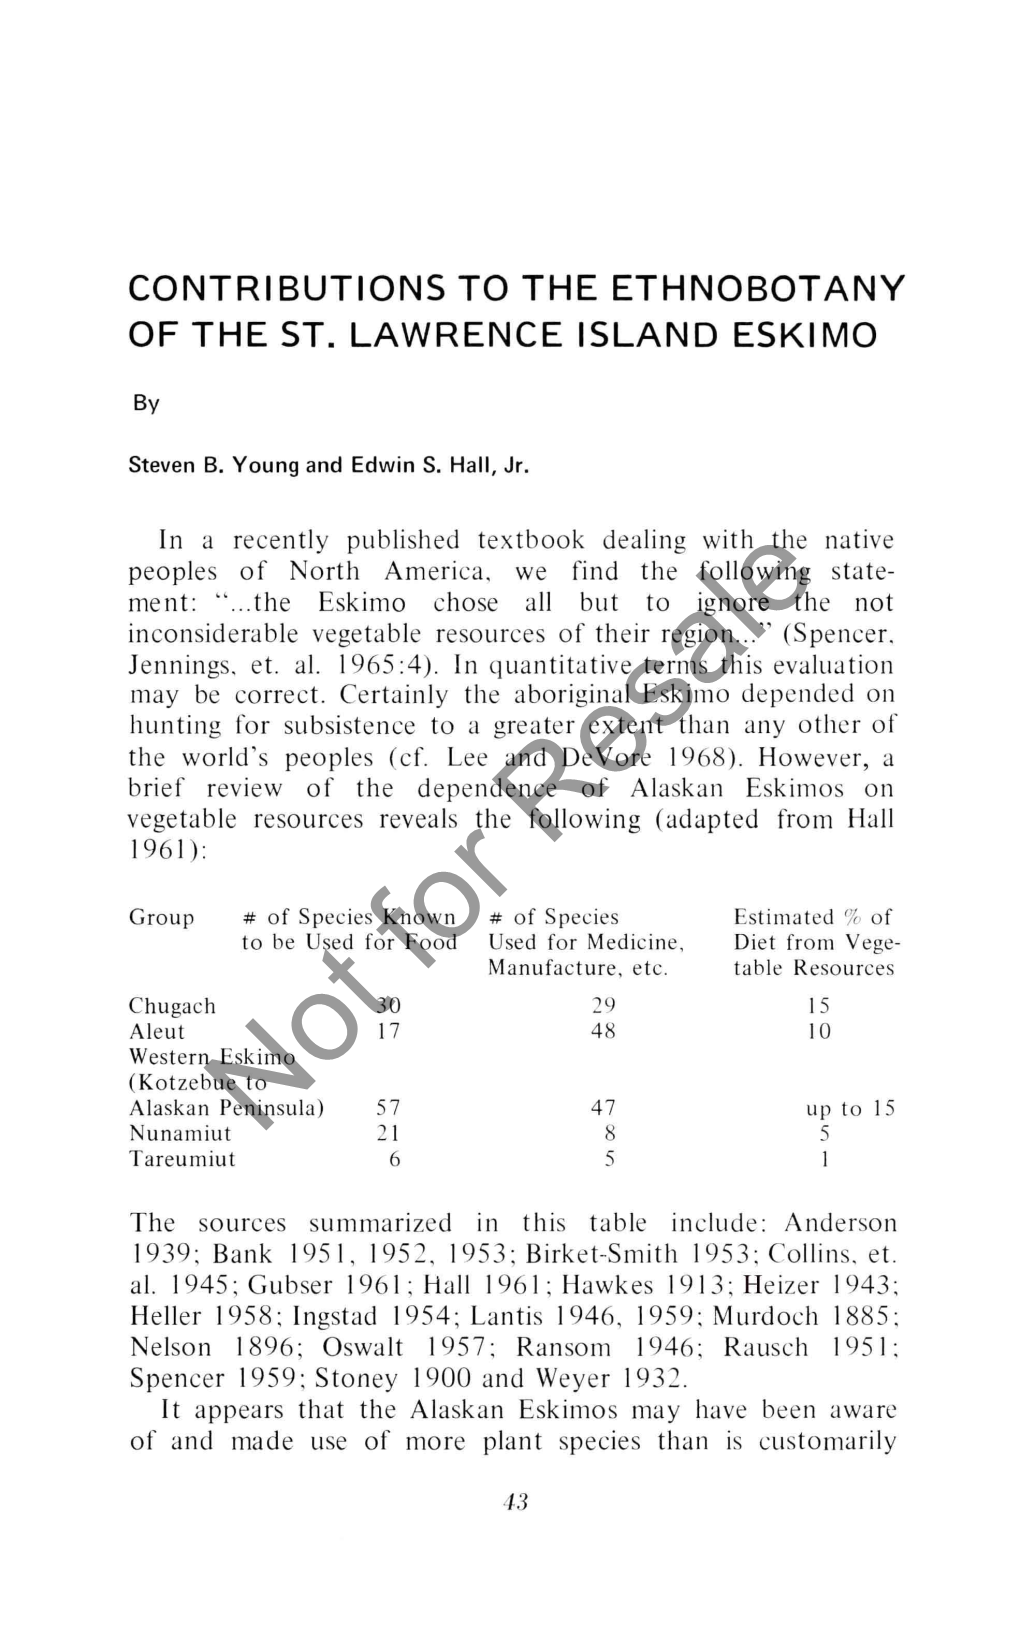 Contributions to the Ethnobotany of the St. Lawrence Island Eskimo